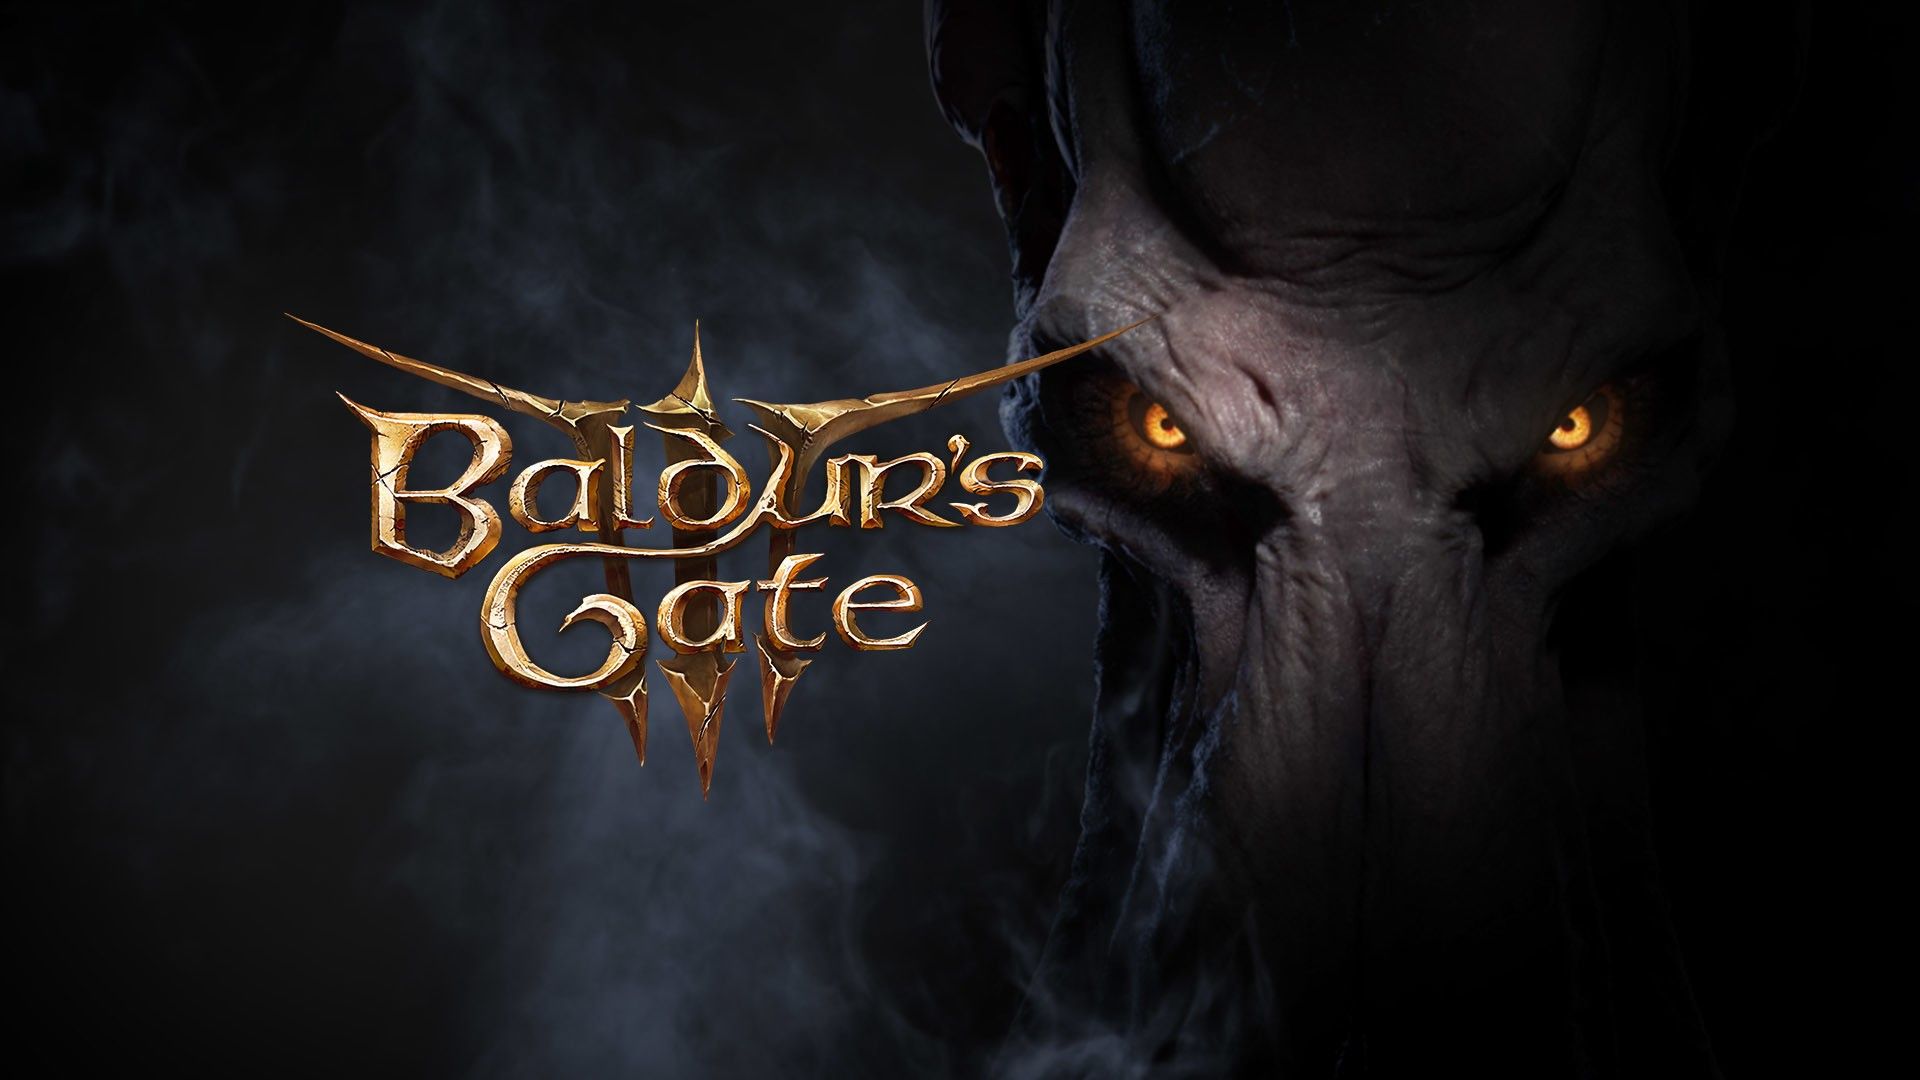 Baldurs Gate 3 download the new